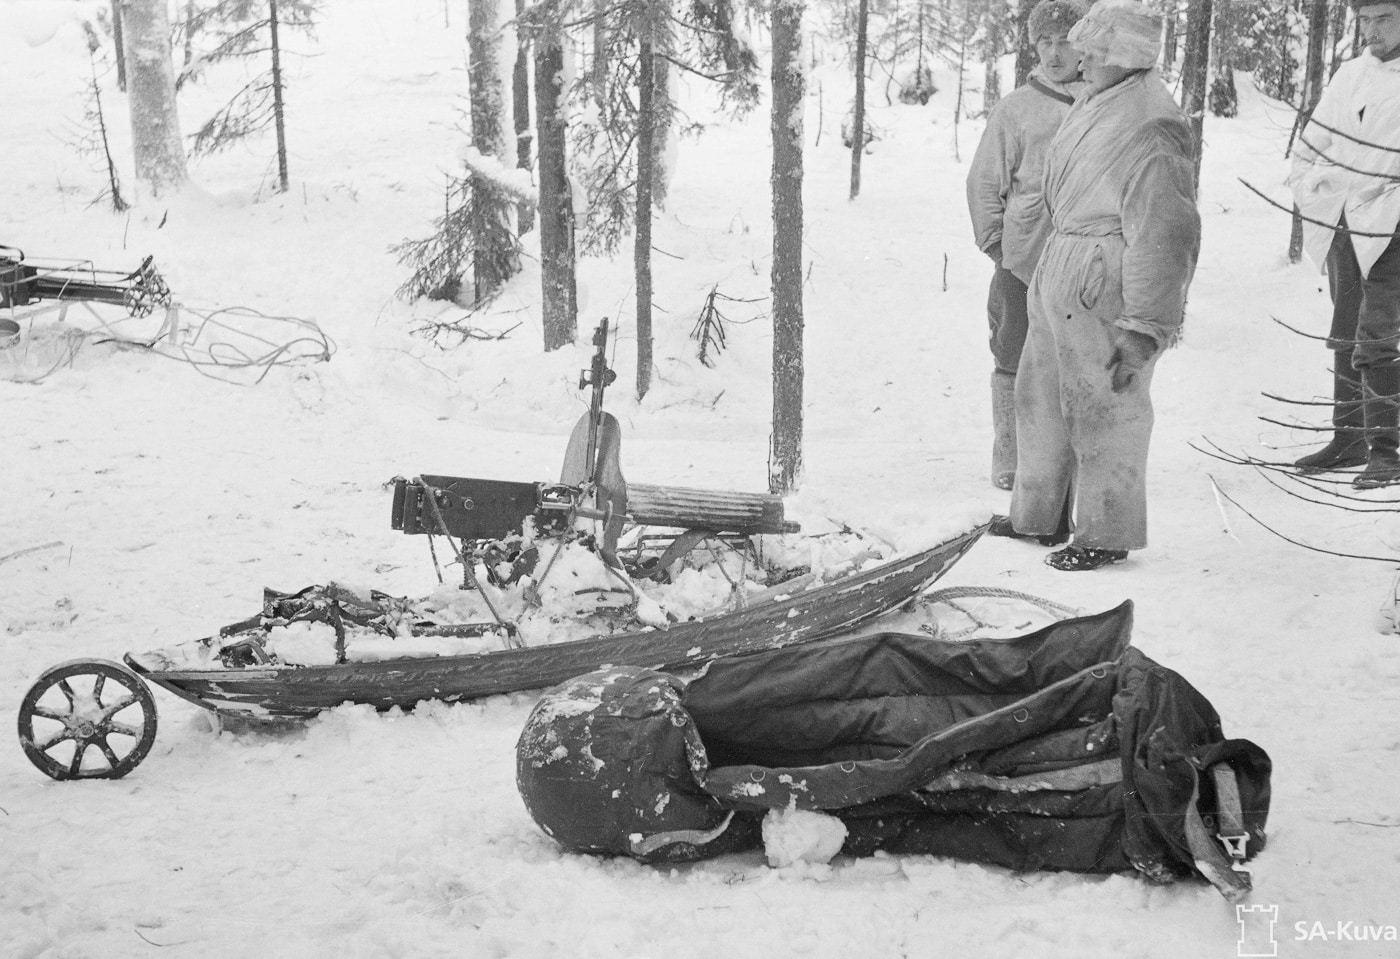 PM1910 machine gun on snow sled